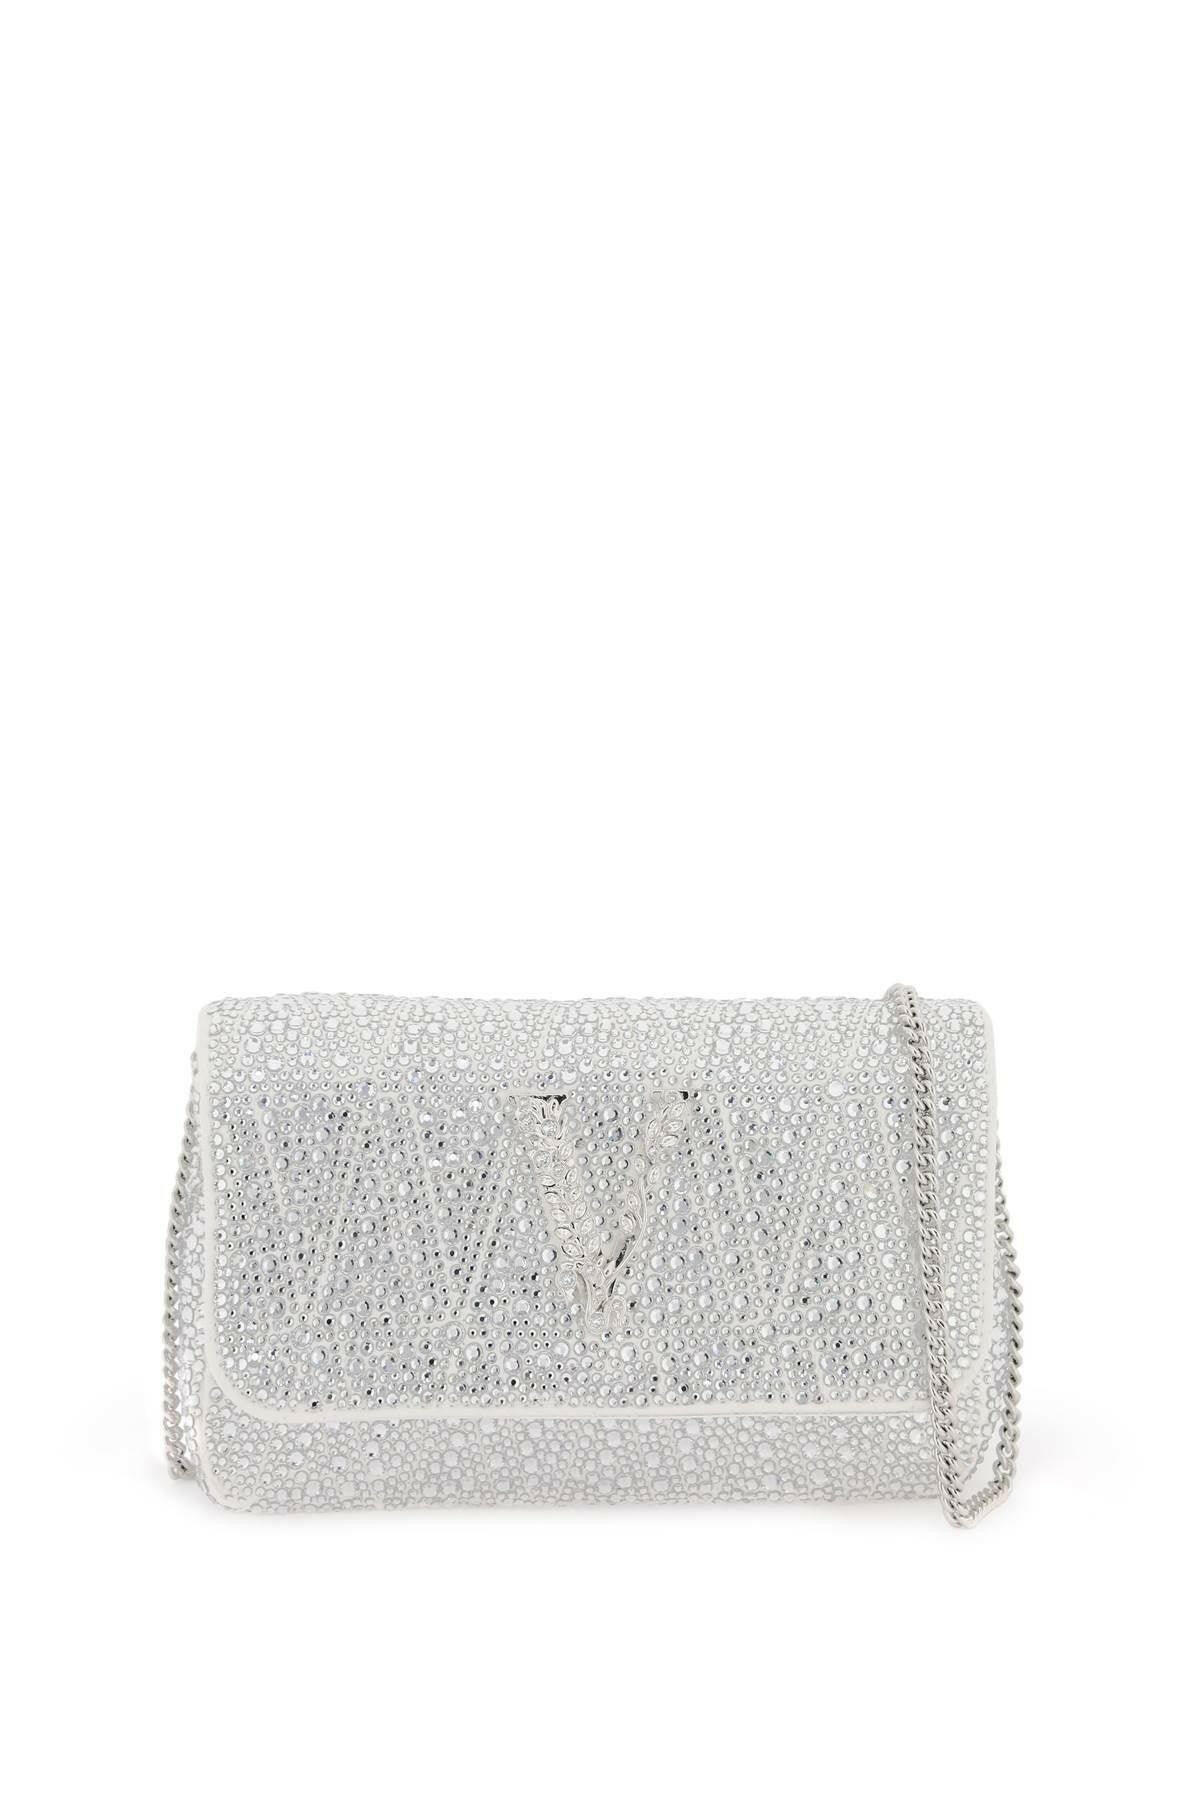 Versace Virtus Mini Bag With Crystals - JOHN JULIA